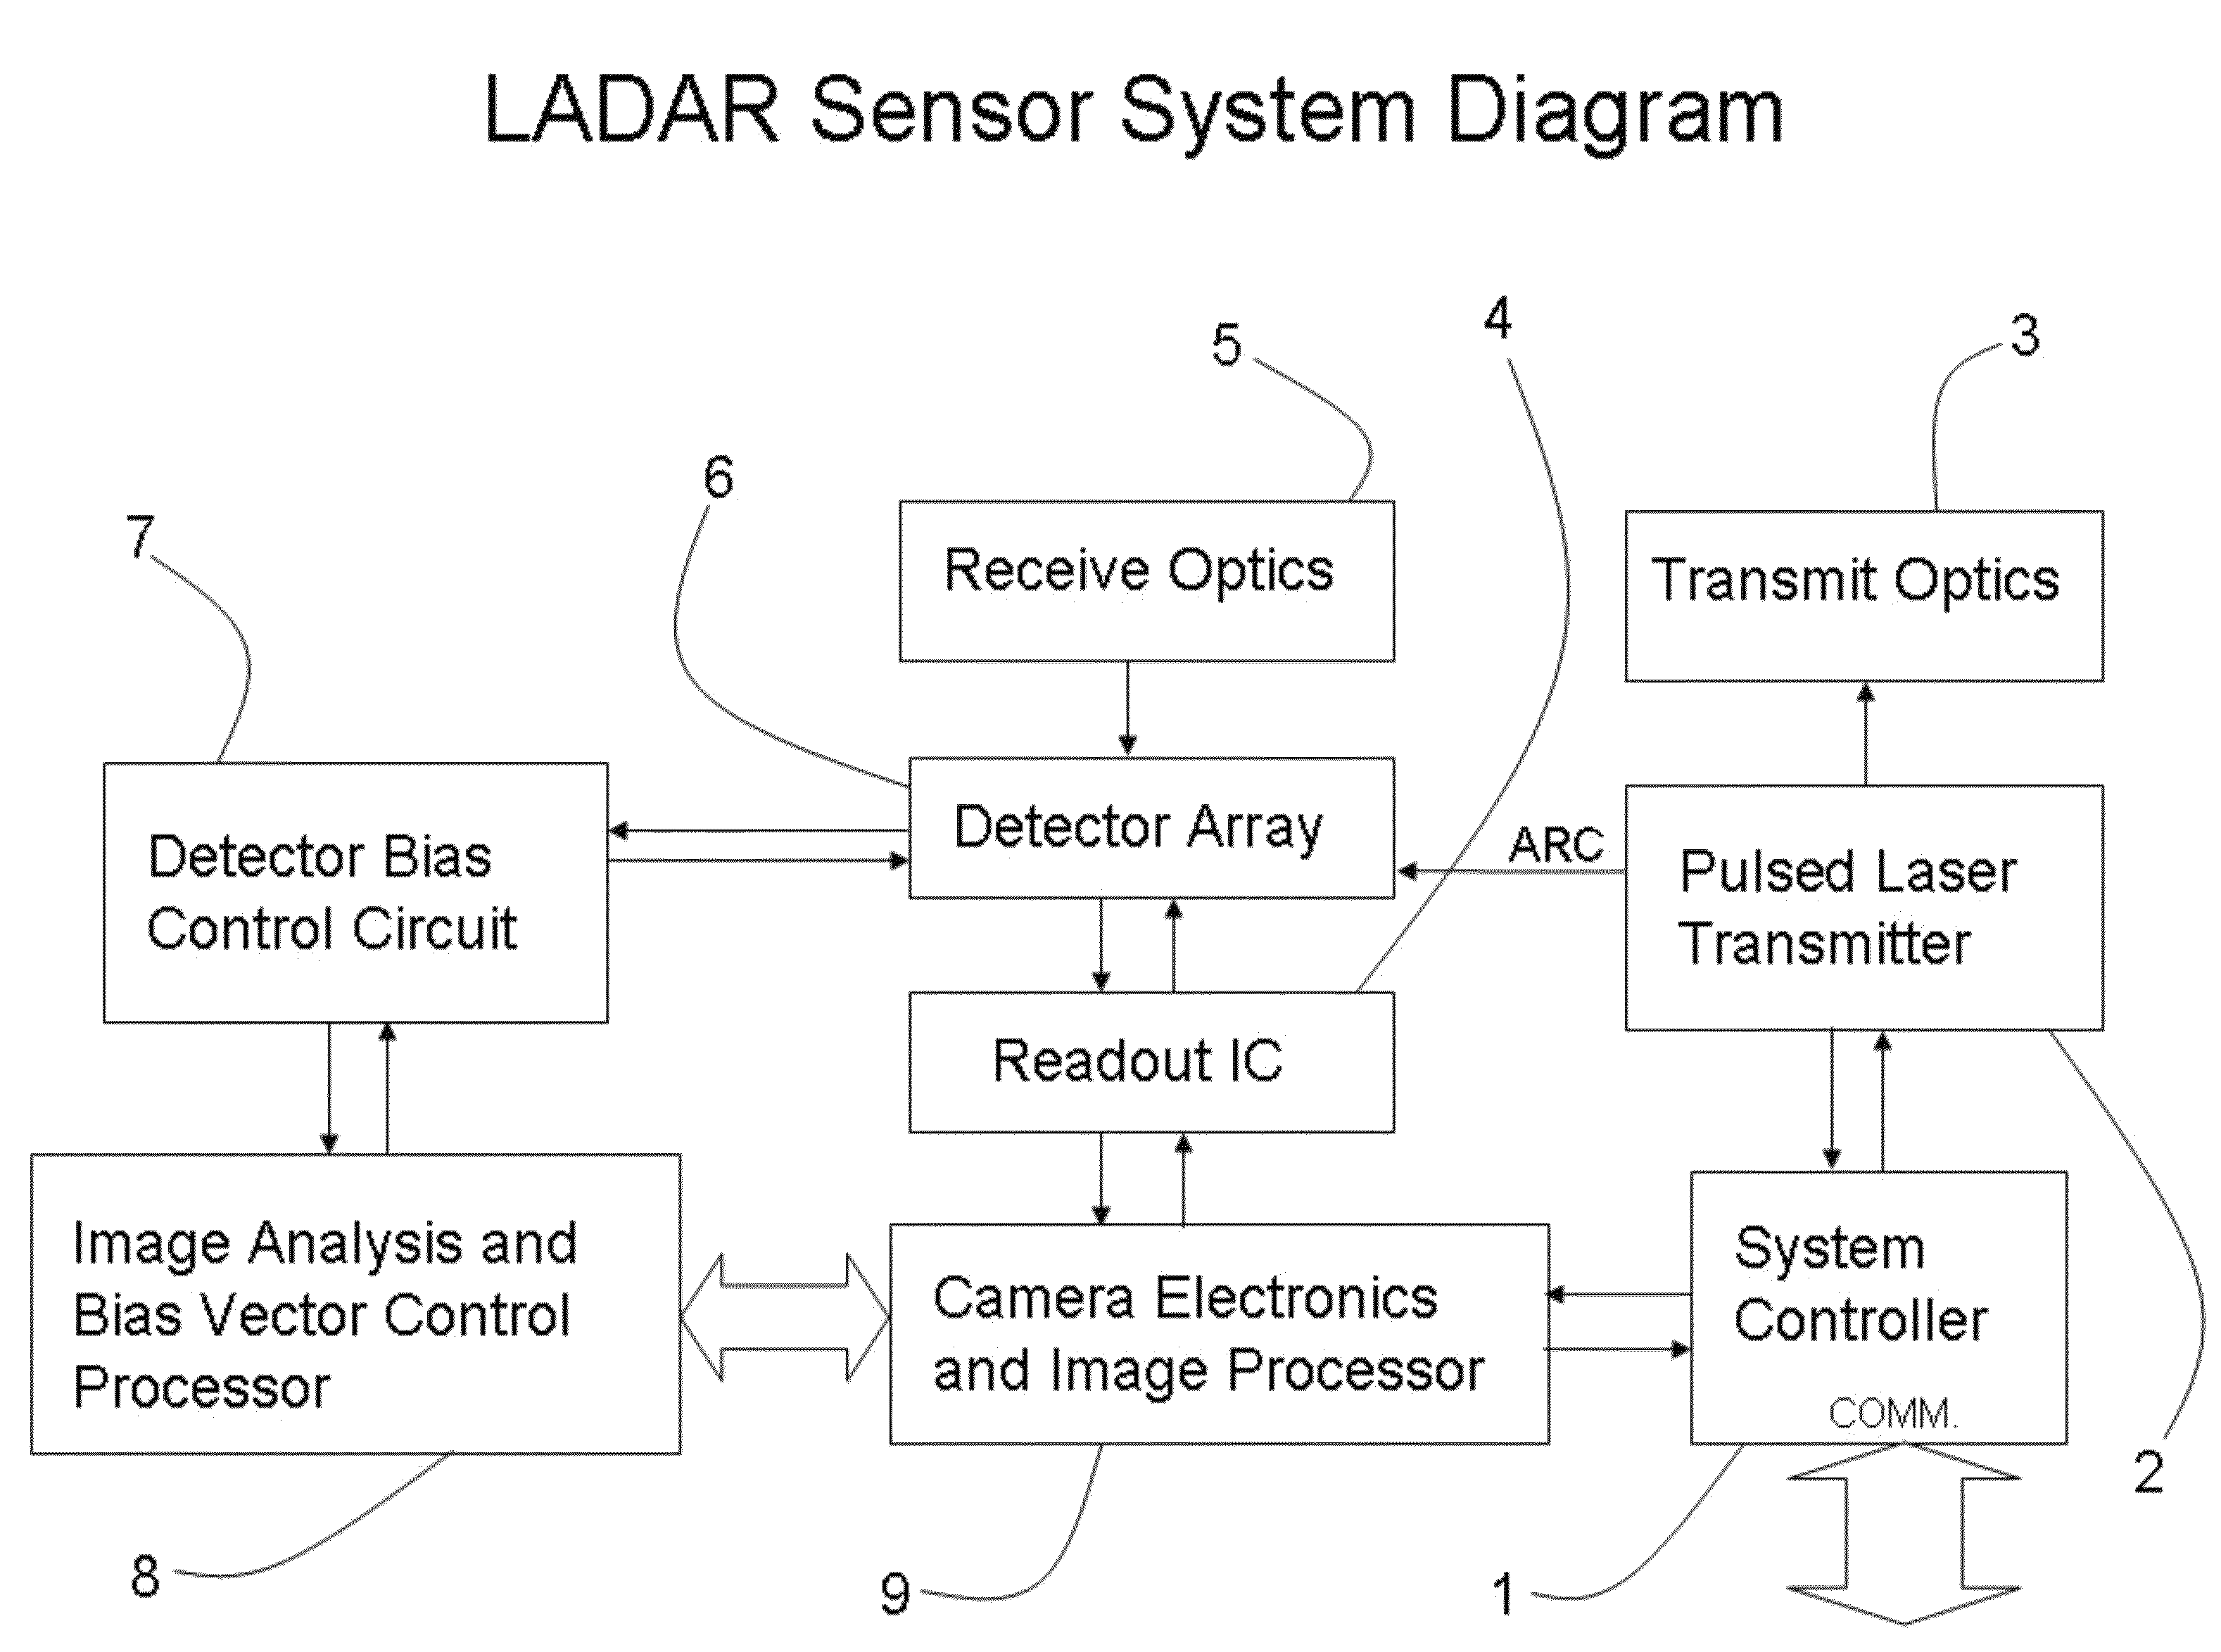 Ladar sensor for landing, docking and approach